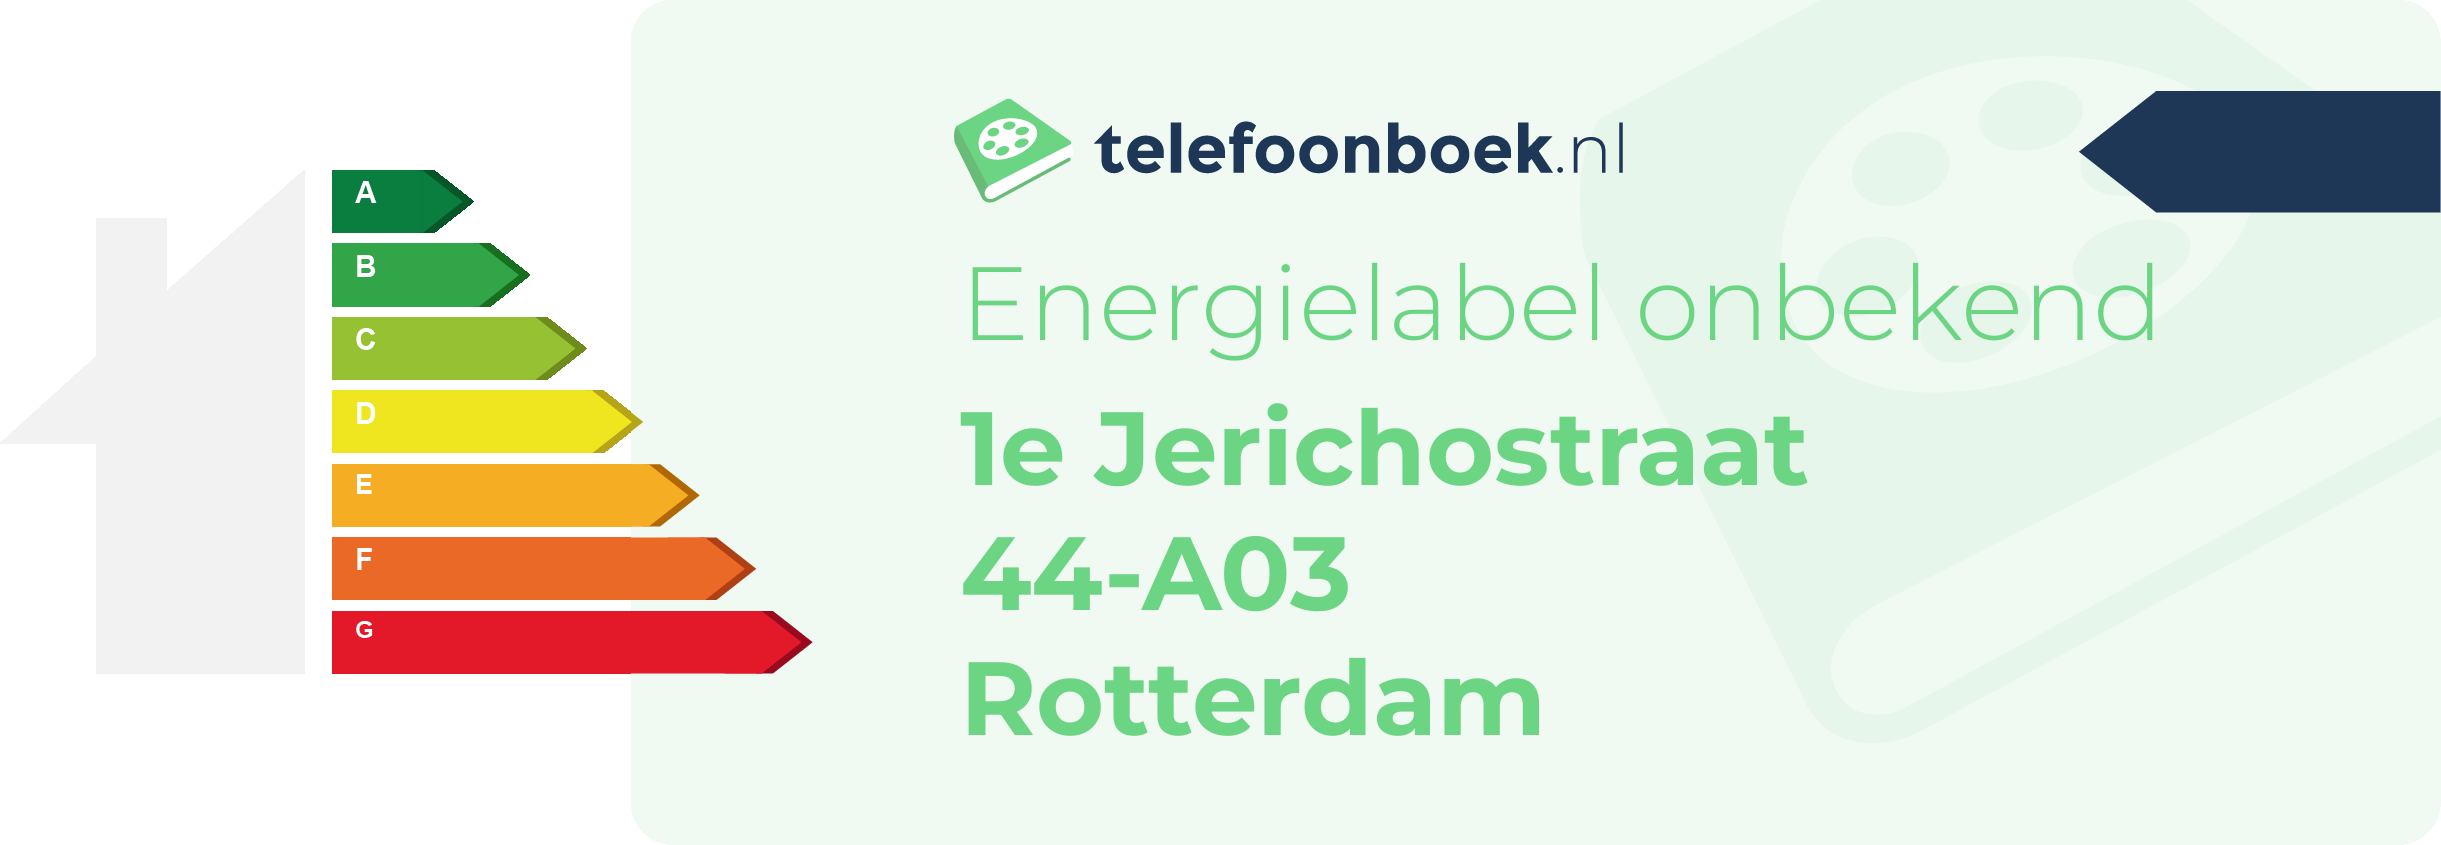 Energielabel 1e Jerichostraat 44-A03 Rotterdam